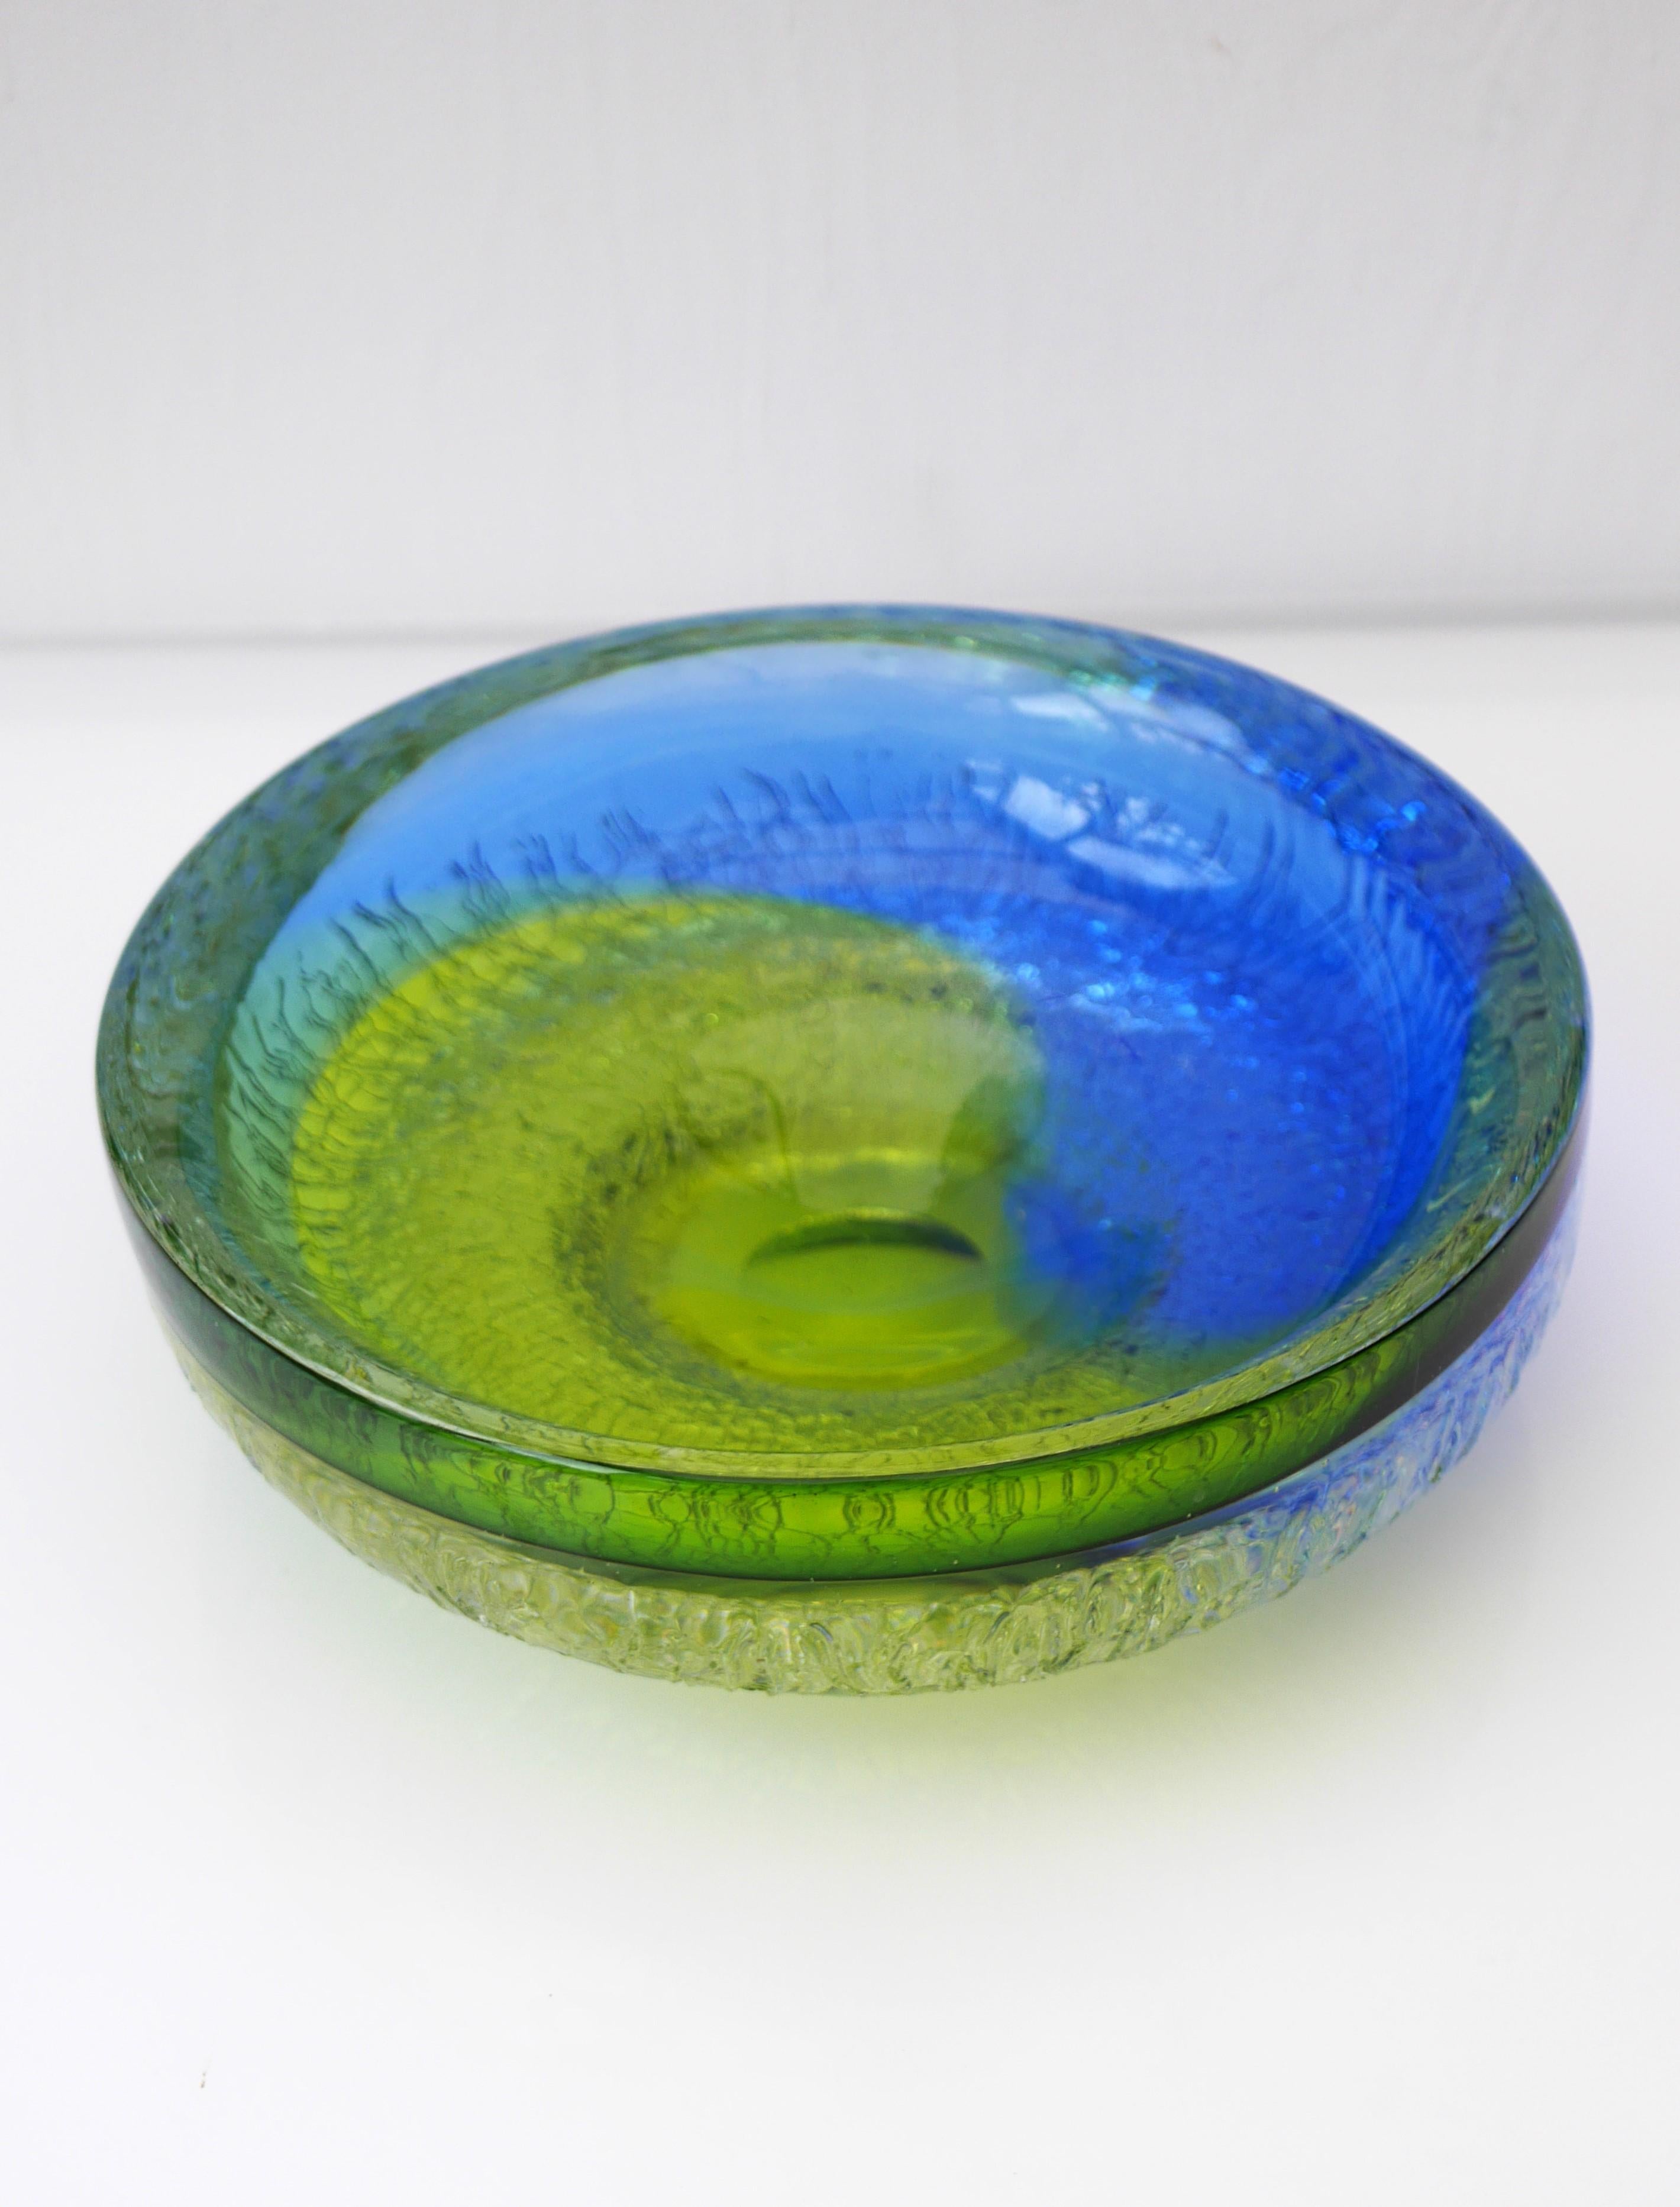 Scandinavian Art glass bowl with amazing colors by Göran Wärff Kosta, Sweden 2